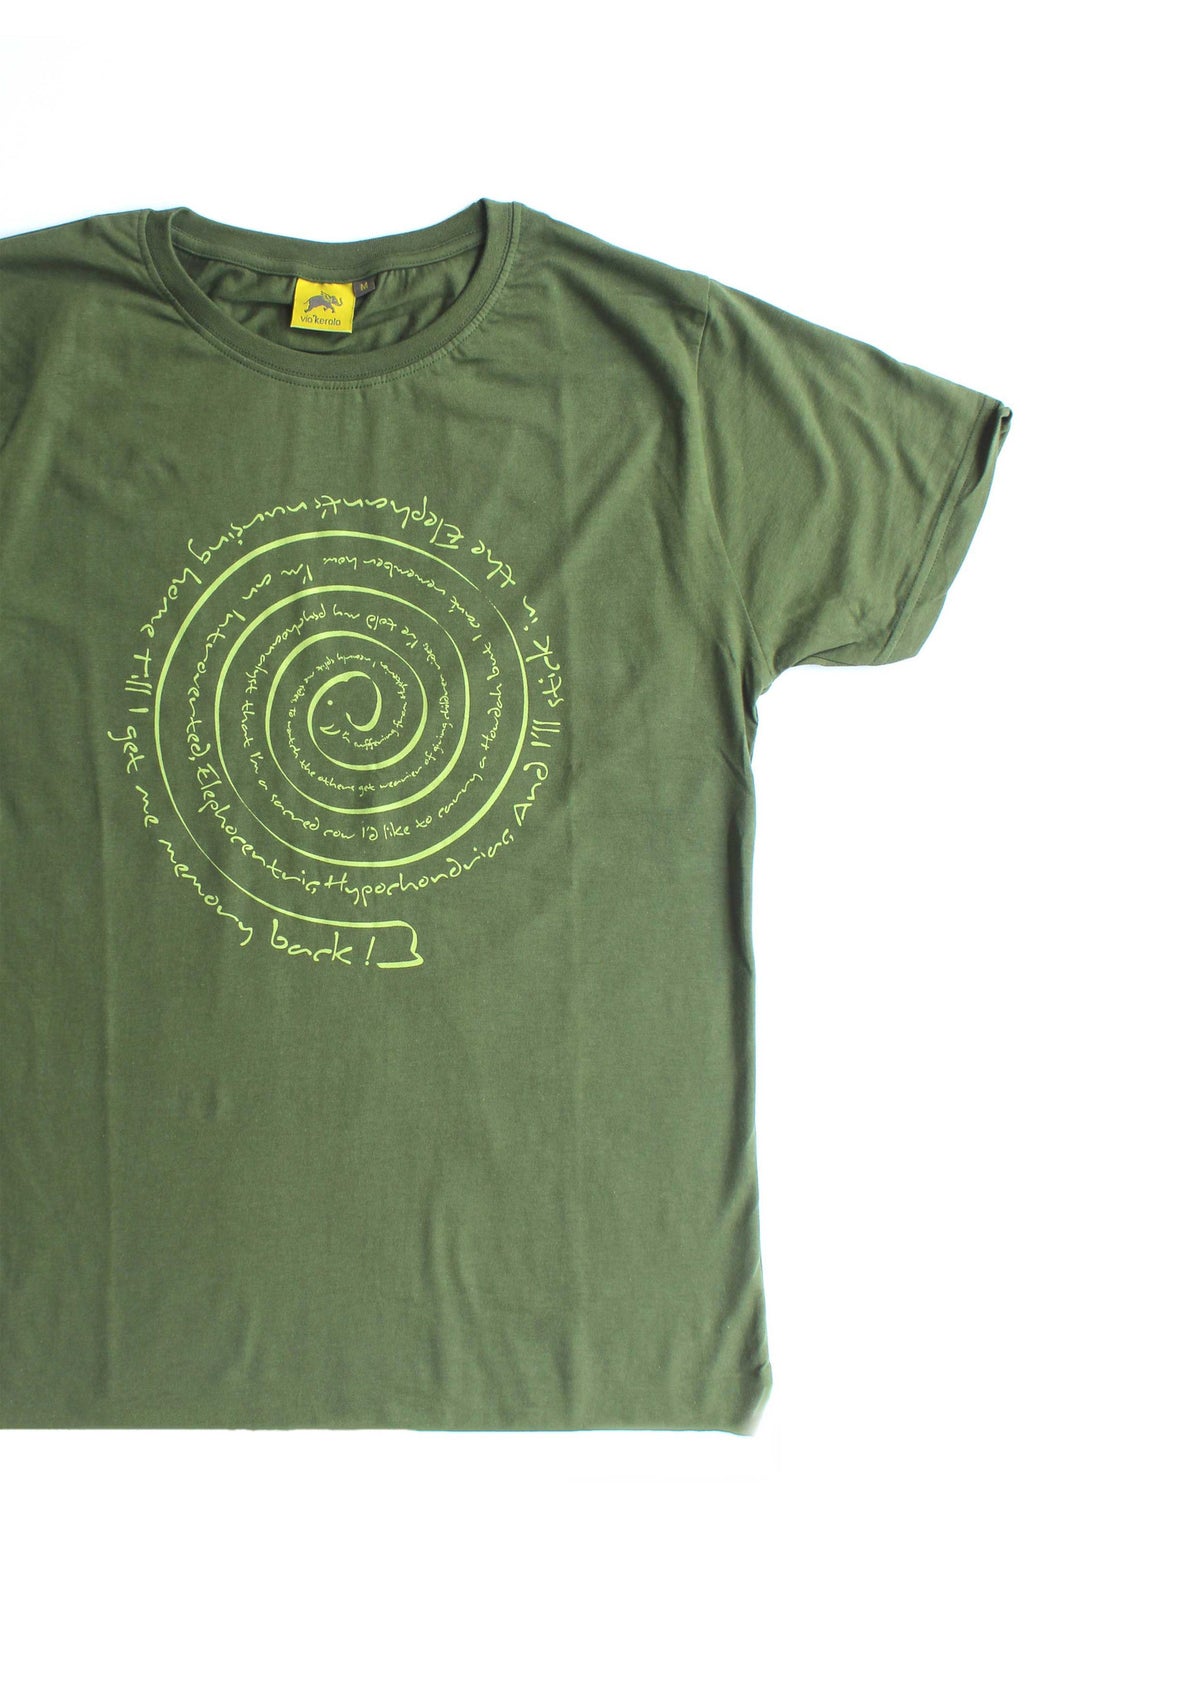 Elephocentric — Adults T-shirt (Maroon)